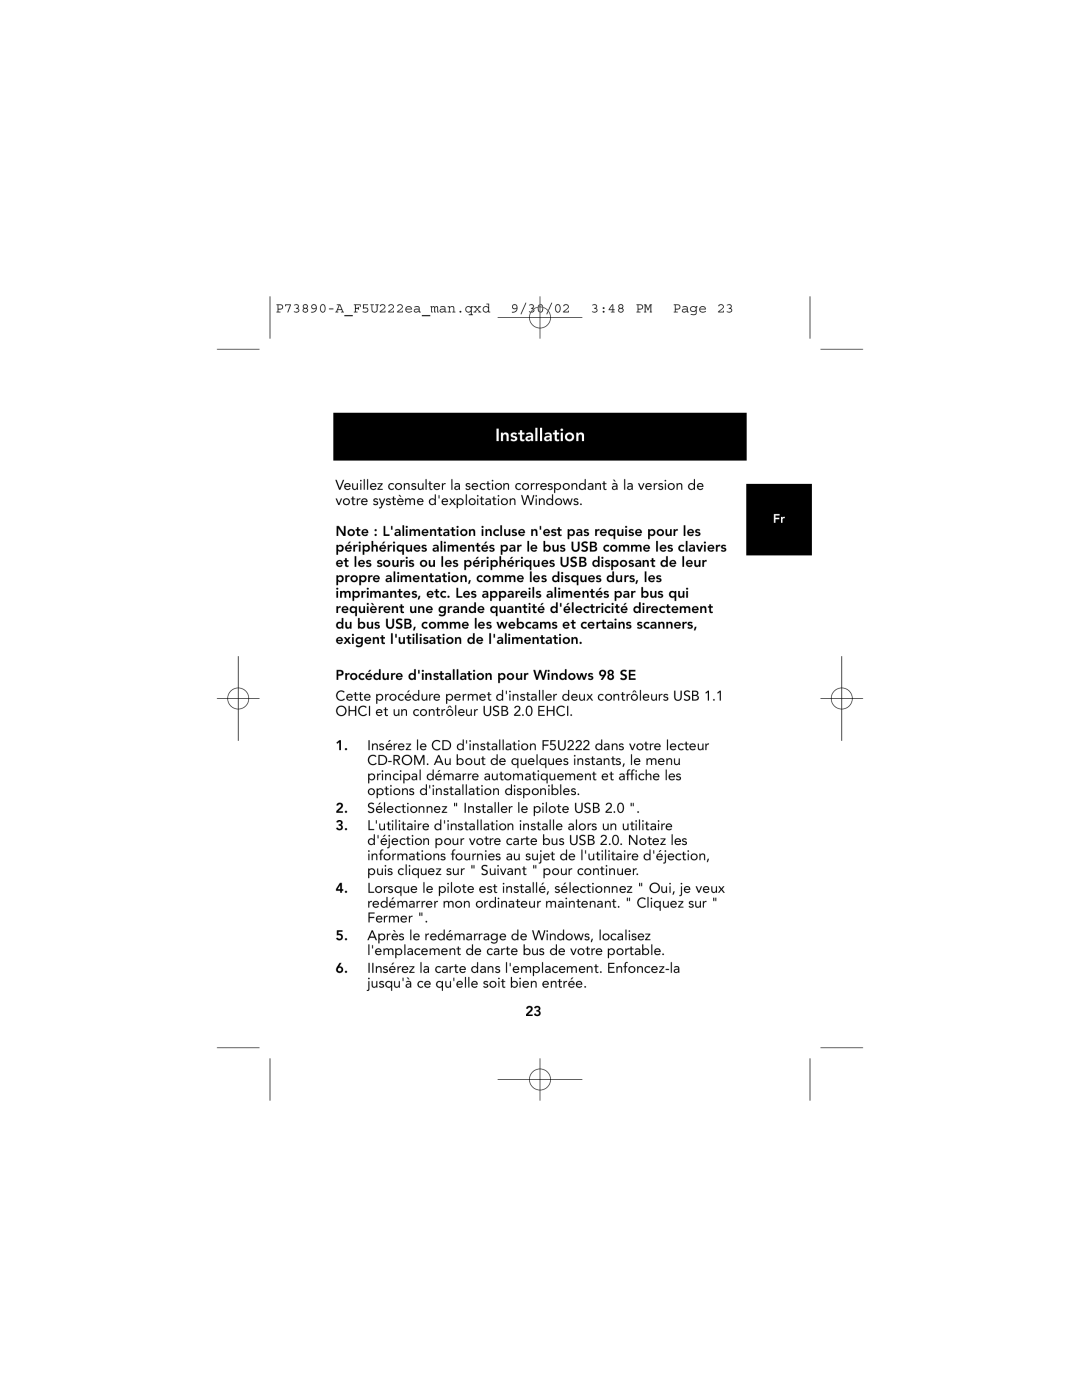 Belkin P73890EA-A manual Installation, Procédure dinstallation pour Windows 98 SE 